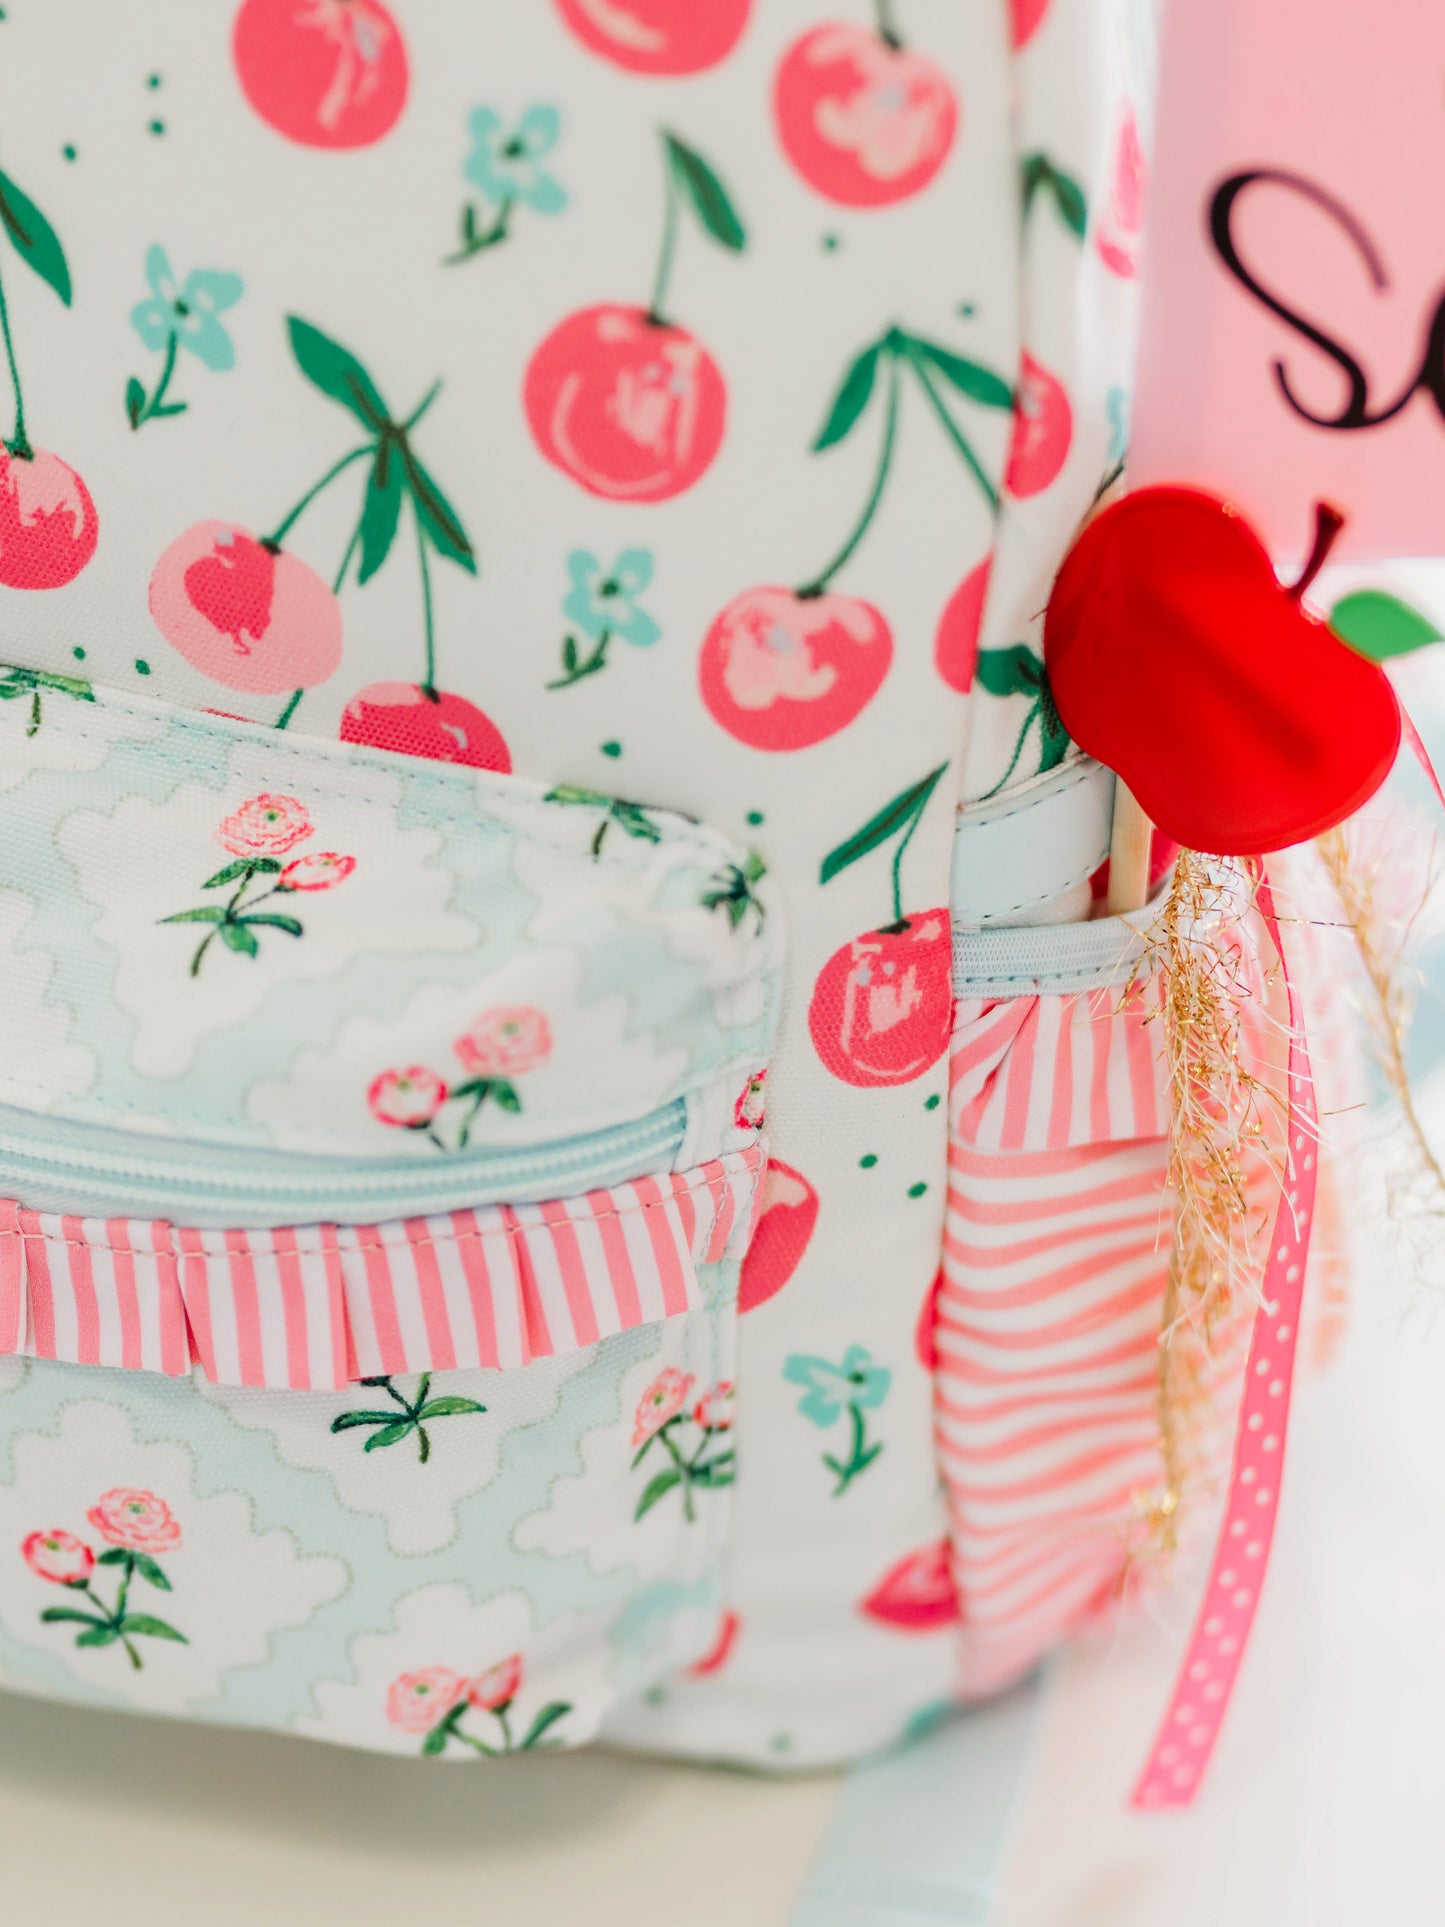 Ridley Backpack - Sweet Cherries